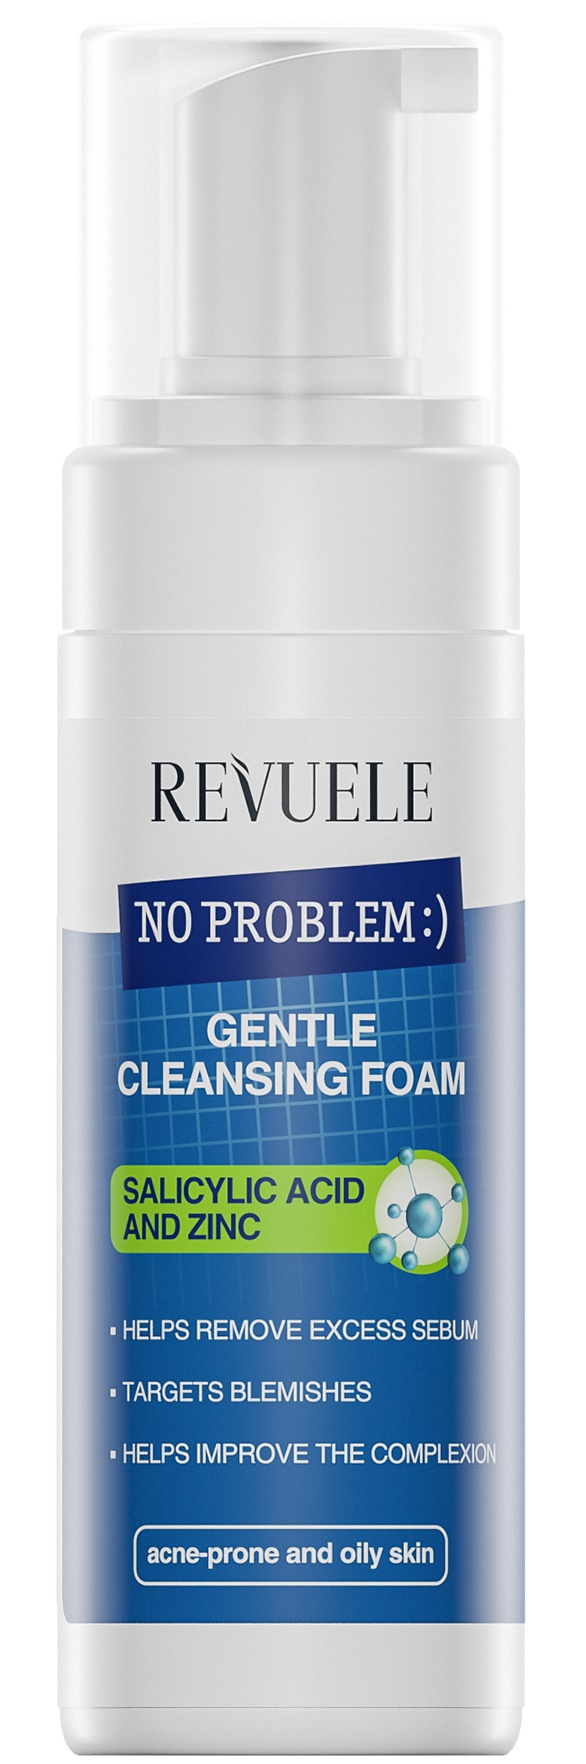 Revuele No Problem Gentle Cleansing Foam Salicylic Acid And Zinc